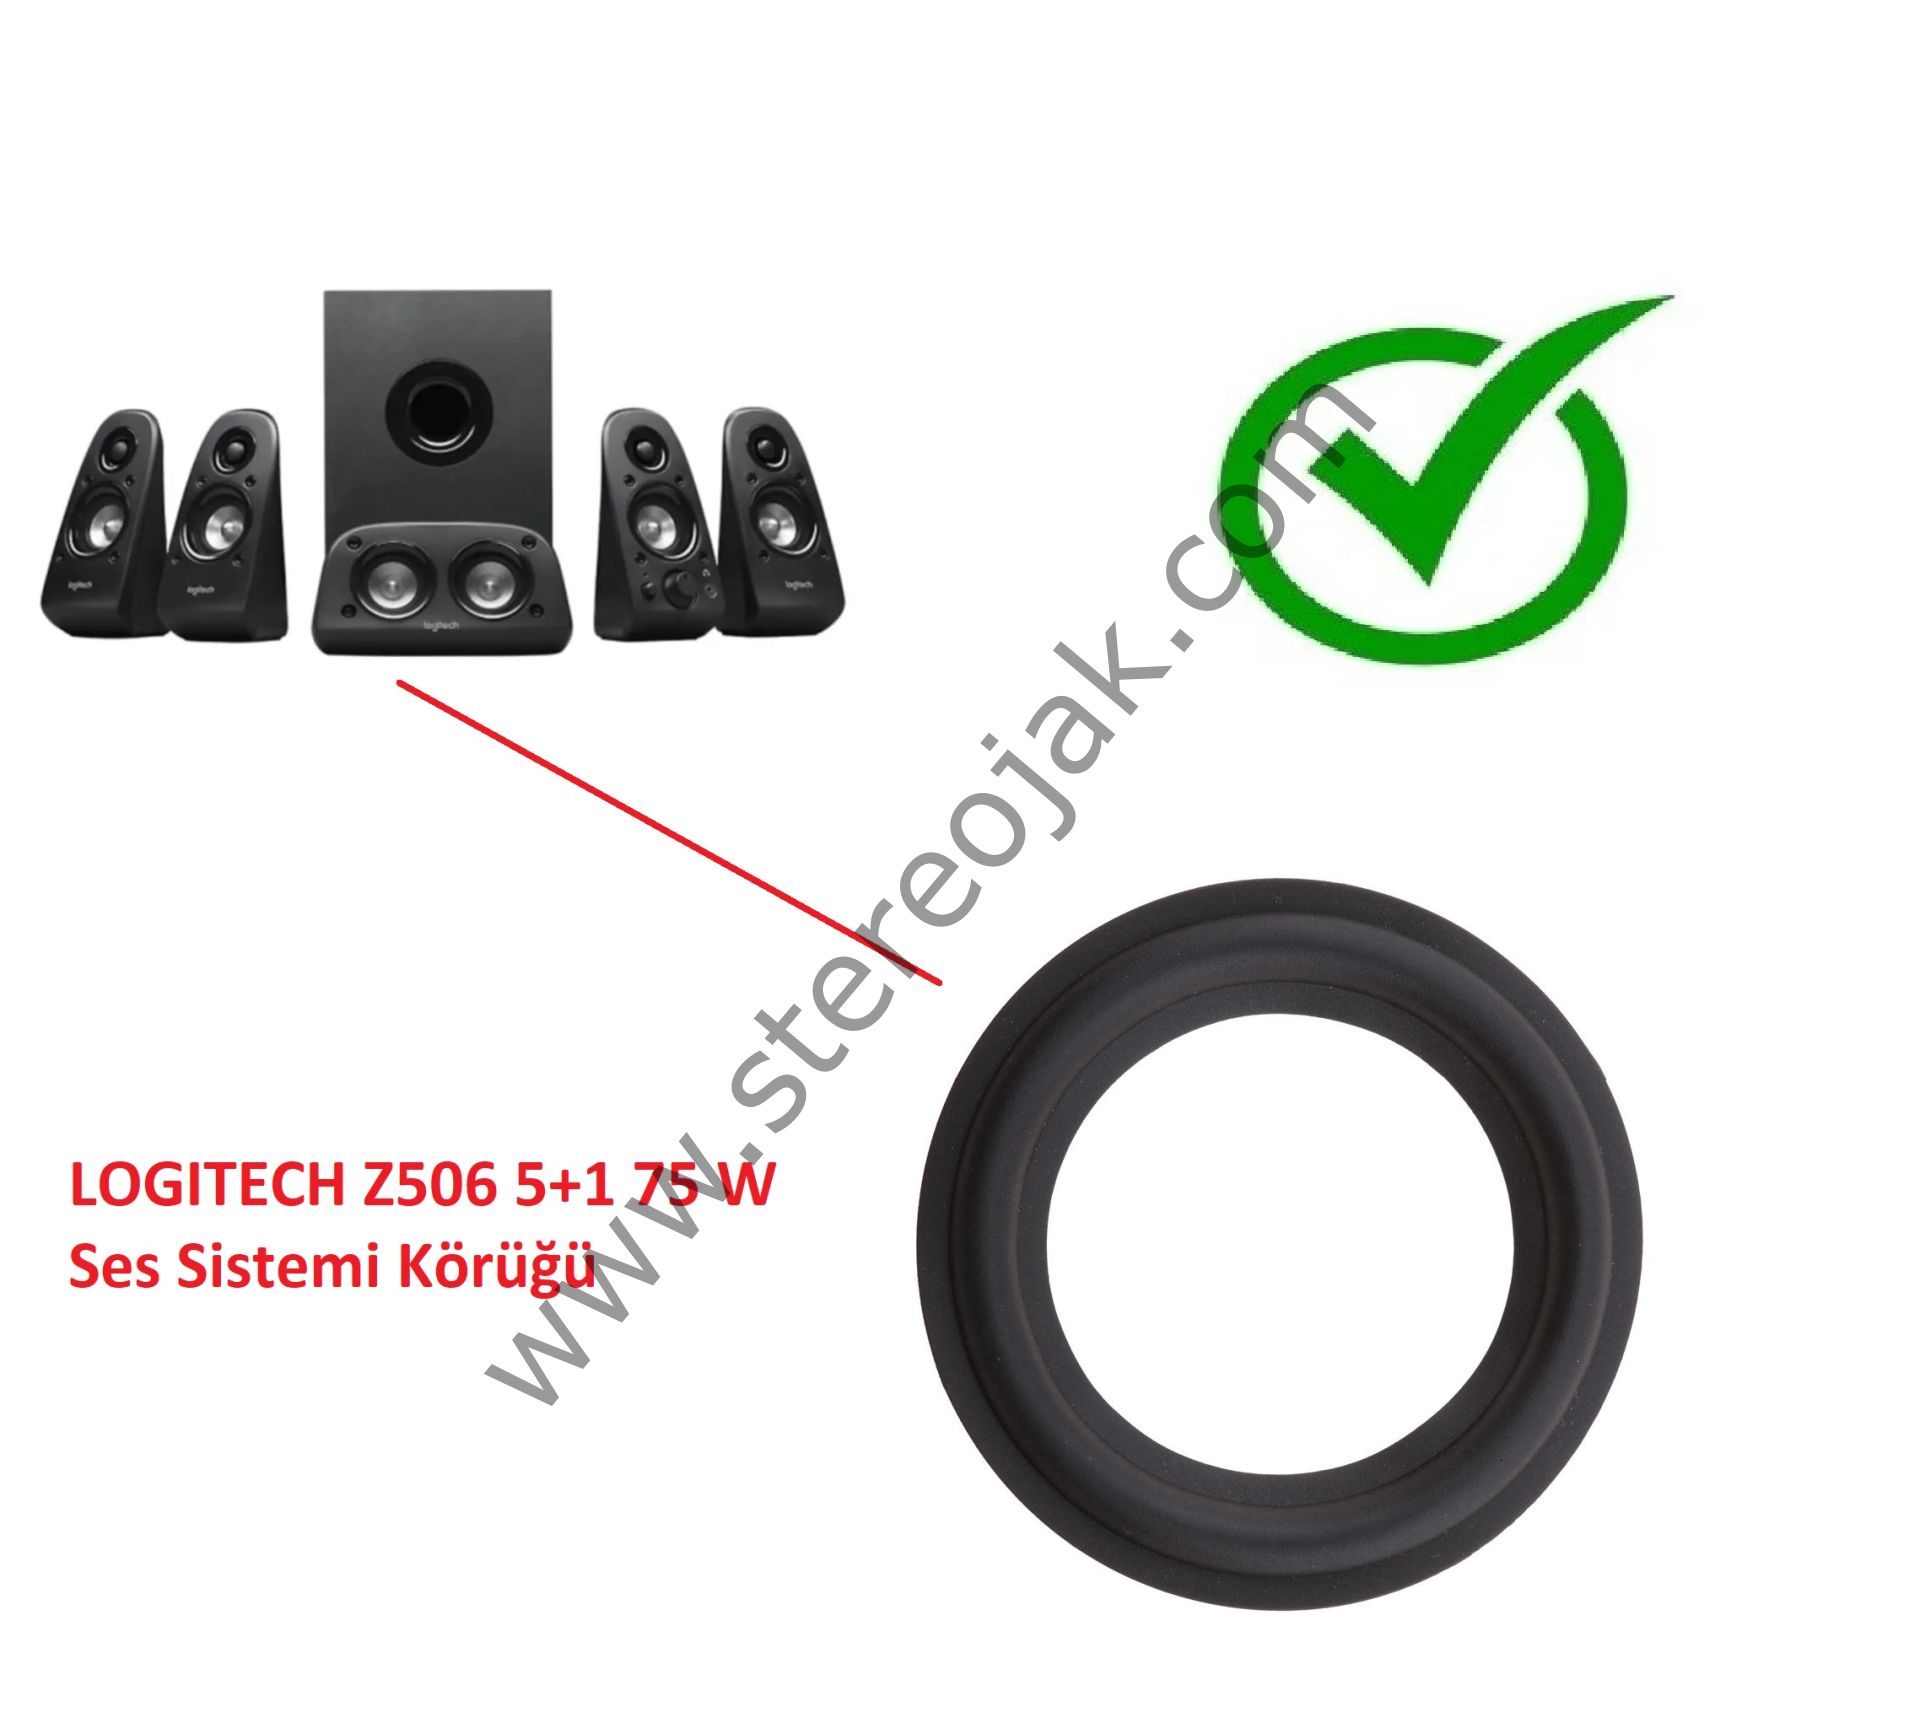 LOGITECH Z506 5+1 75 W Ses Sistemi Körüğü